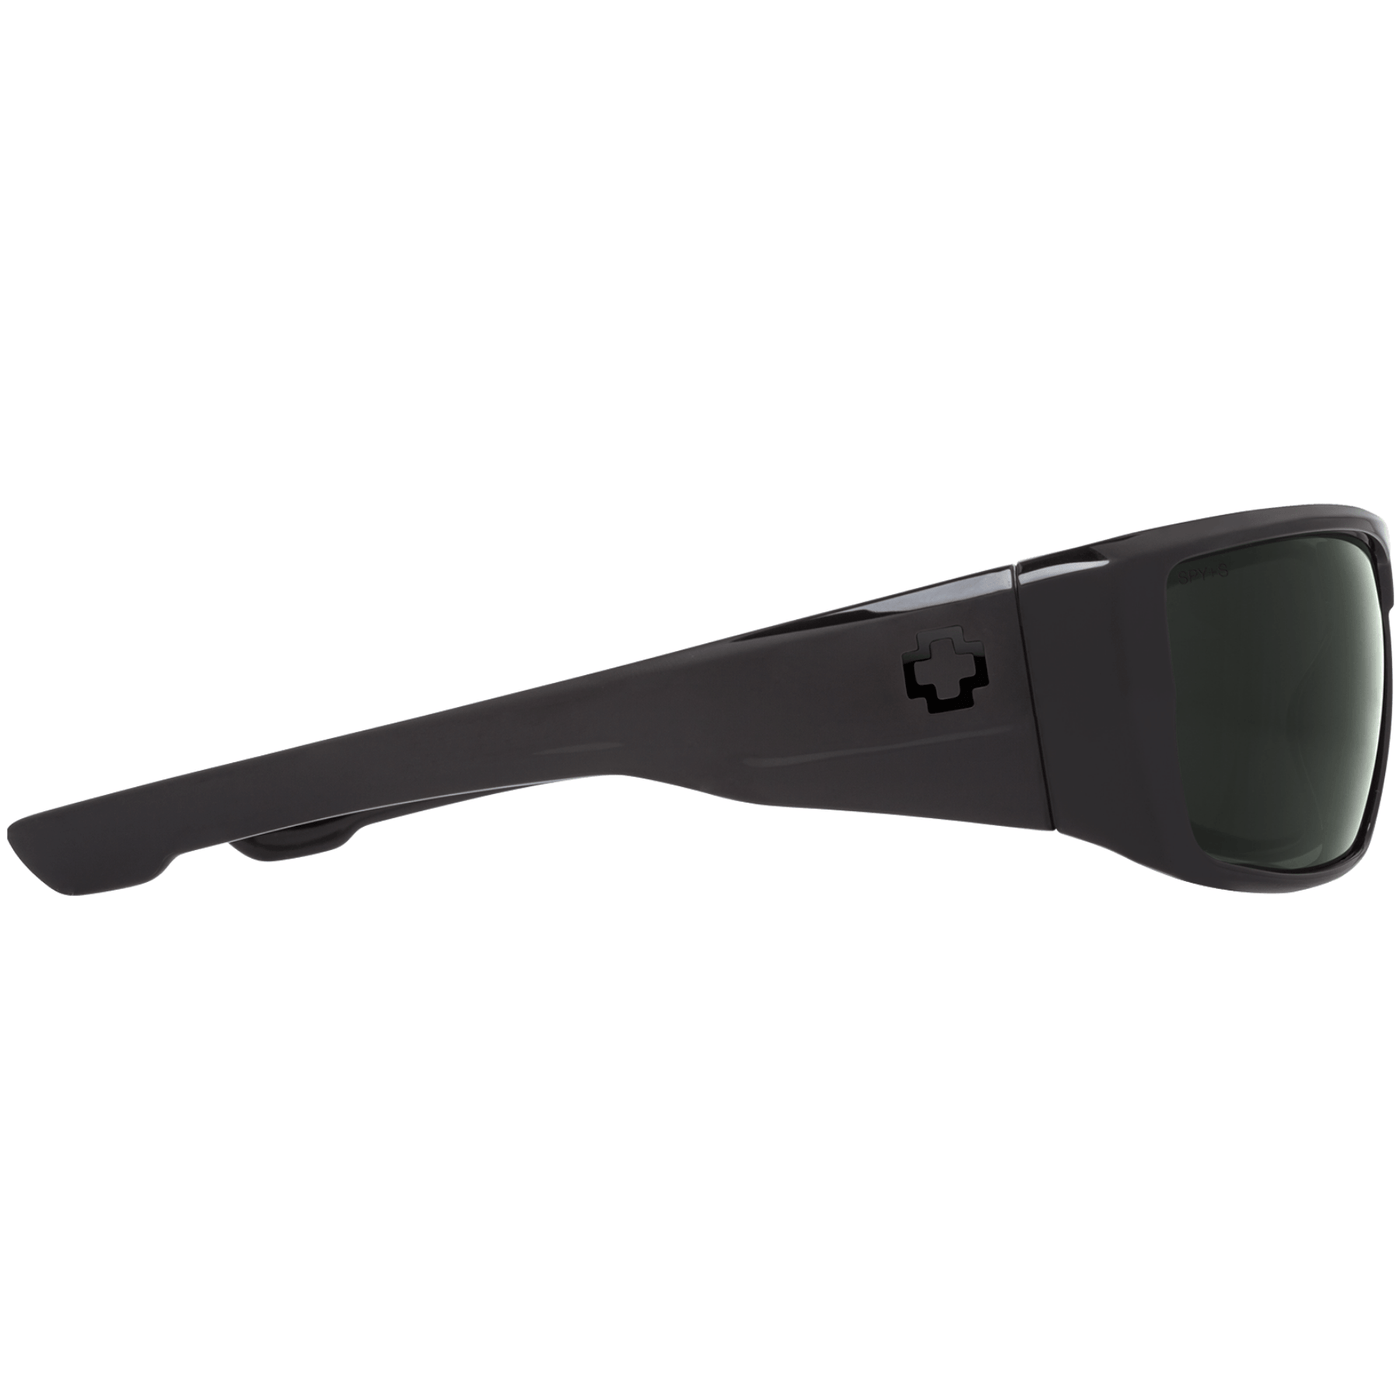 SPY DIRK ANSI Polarized Sunglasses, Happy Lens - SOSI Black 8Lines Shop - Fast Shipping